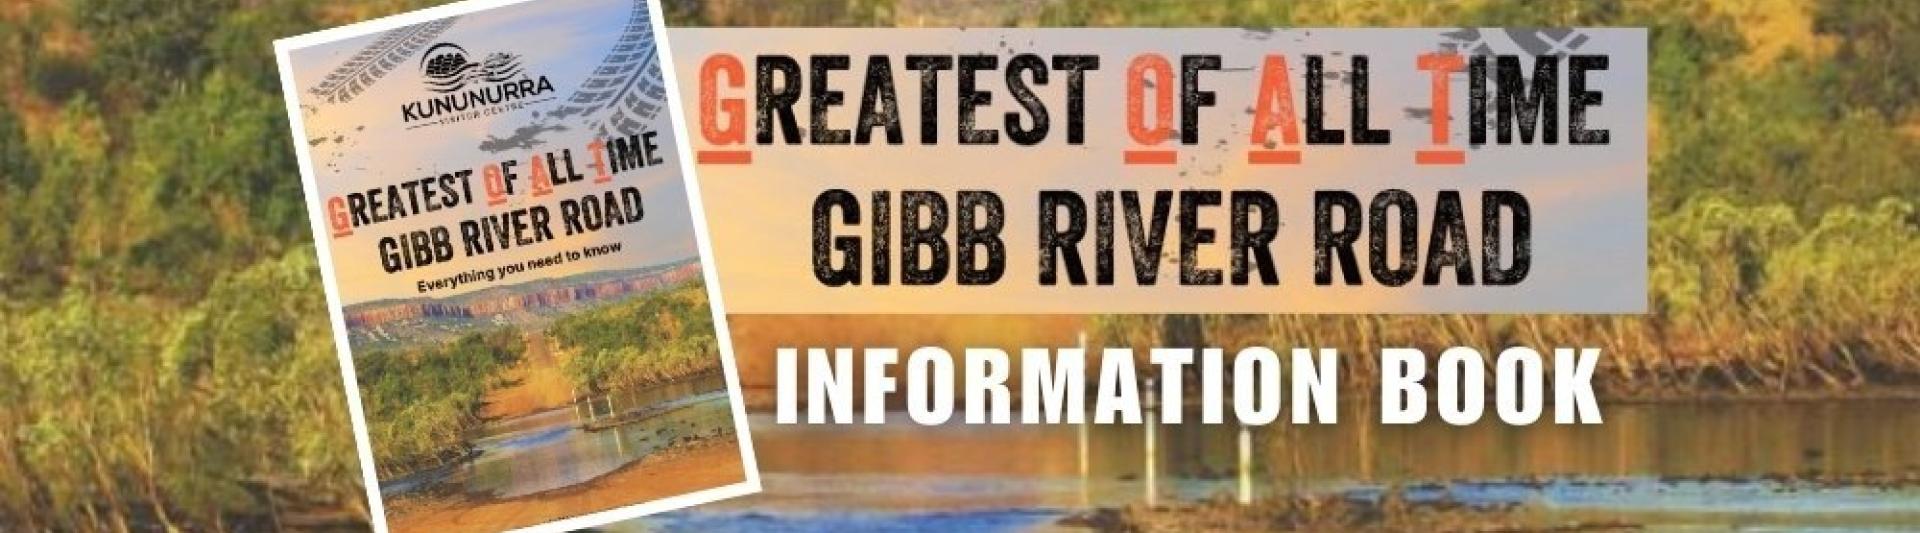 Blog GOAT Gibb River Road Guide